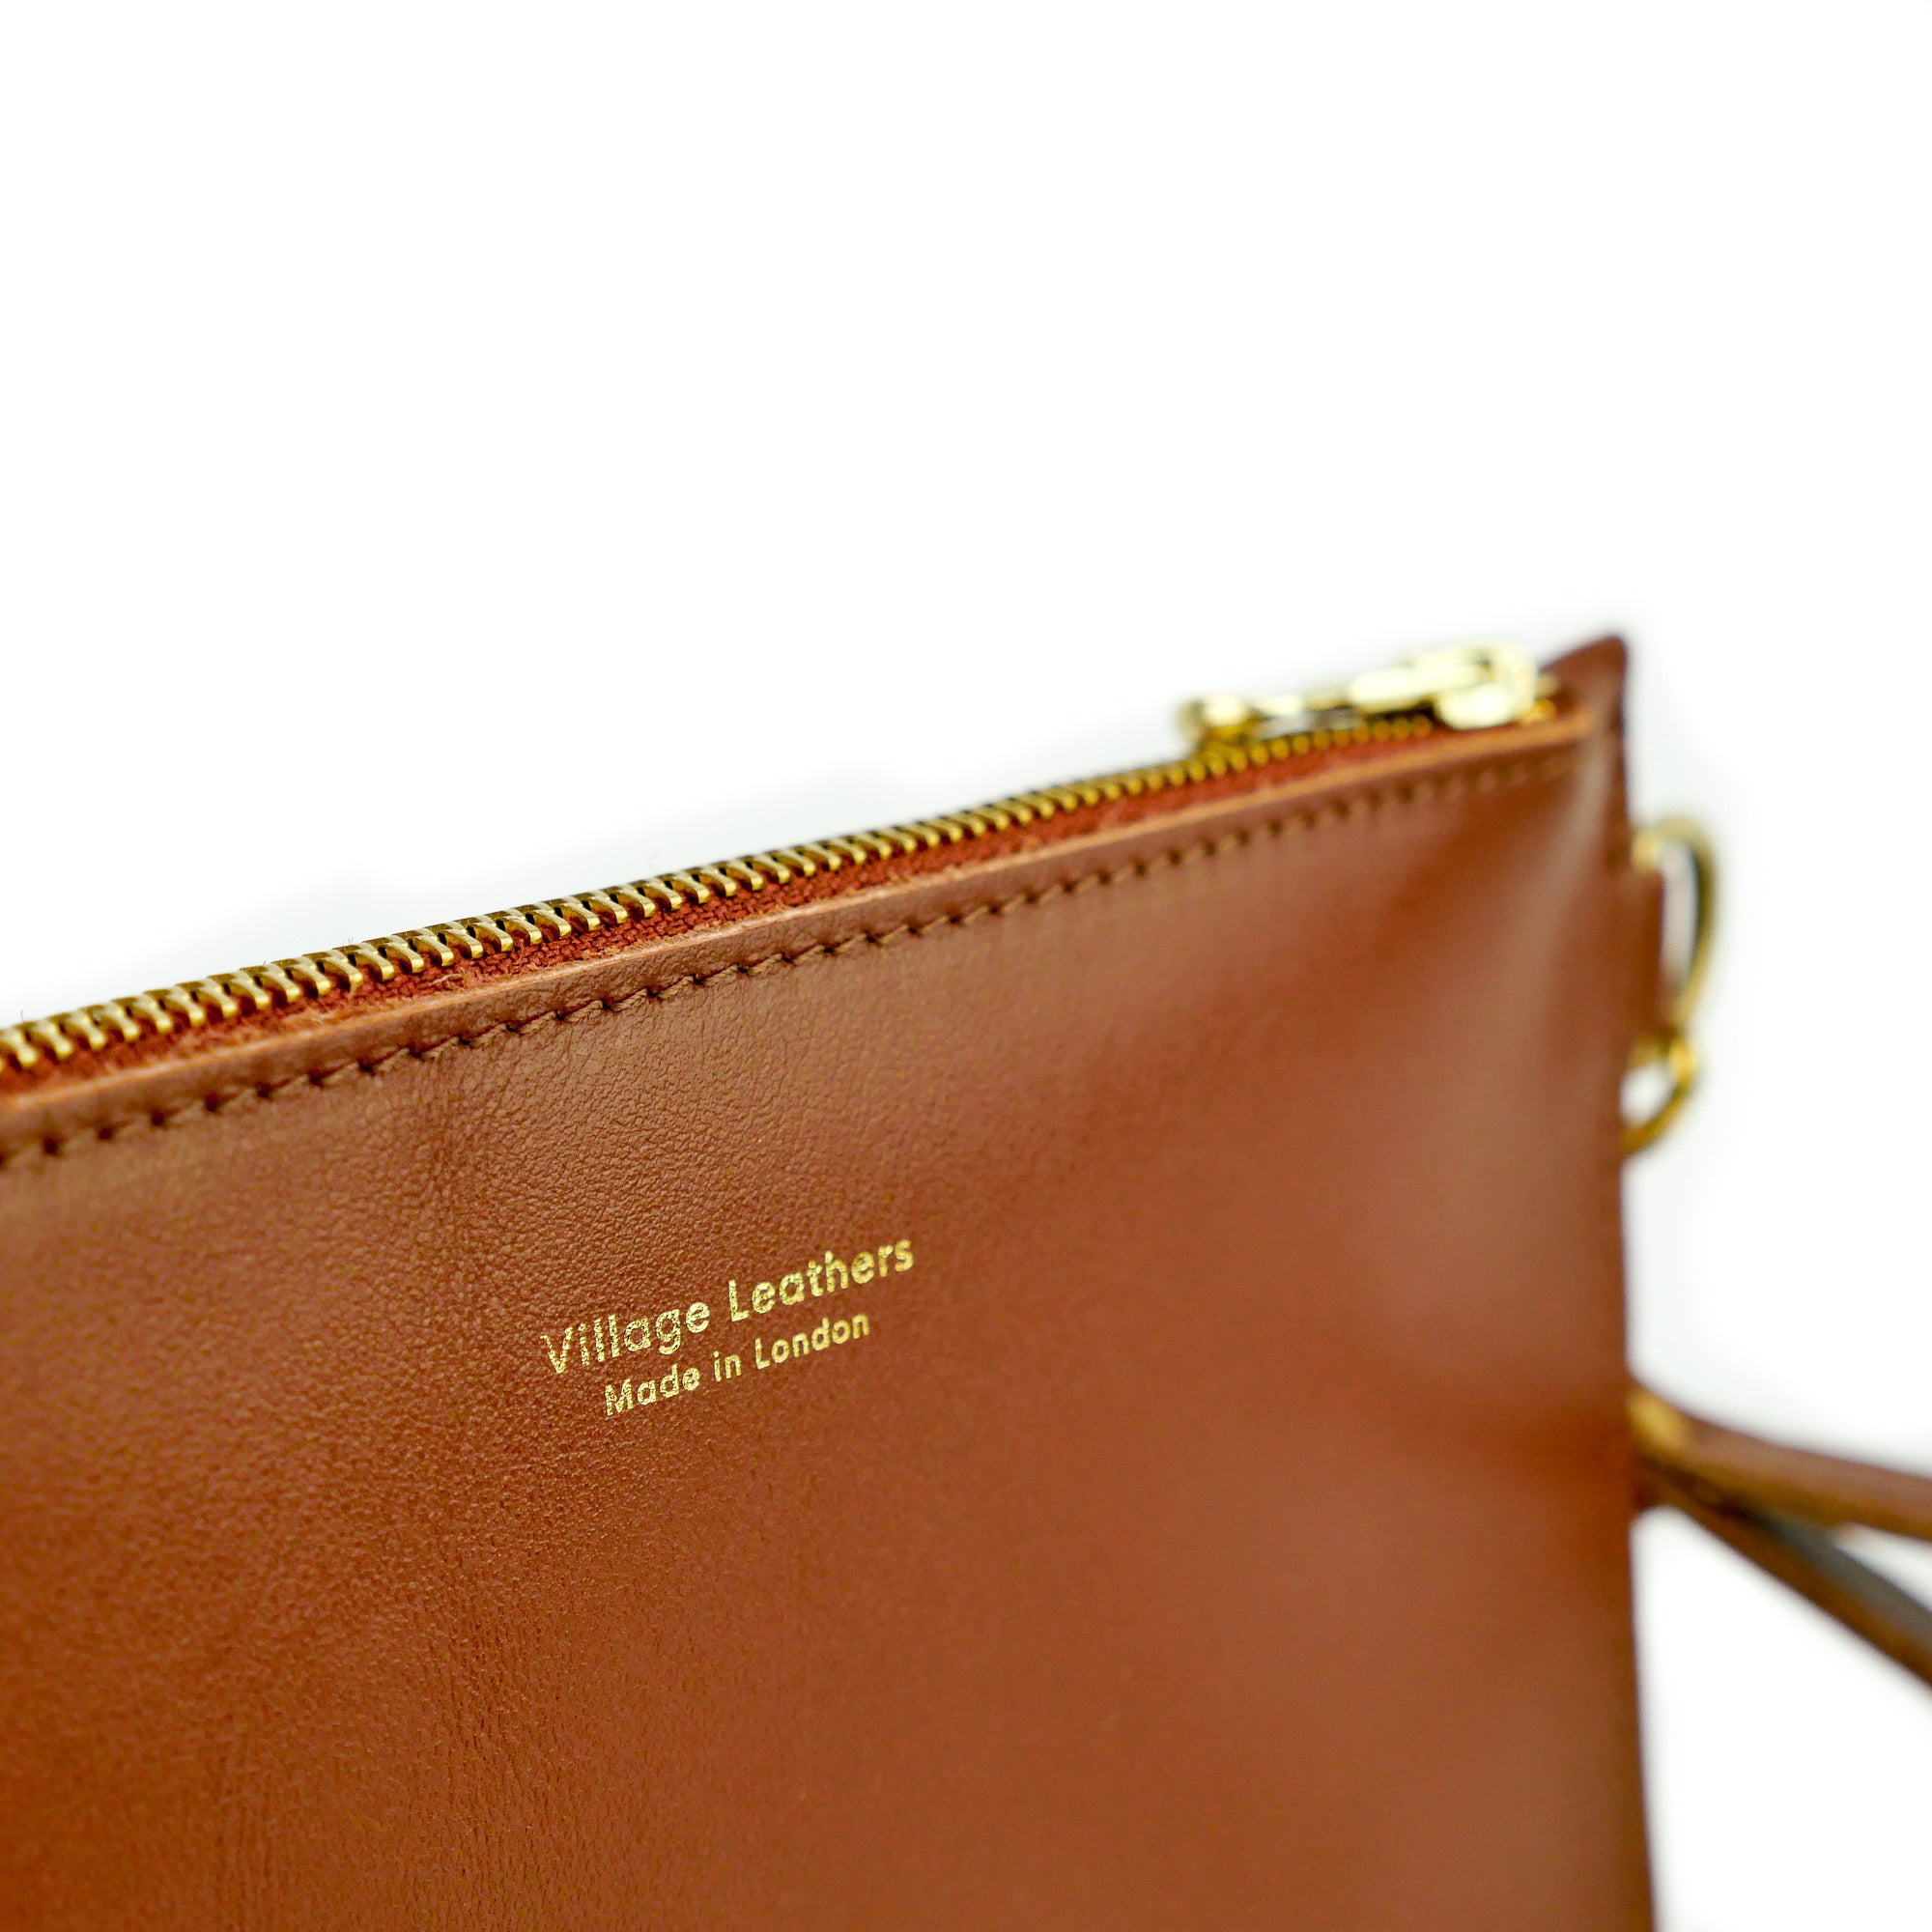 The Wristlet Italian Leather Bag, Made in Italy Orange